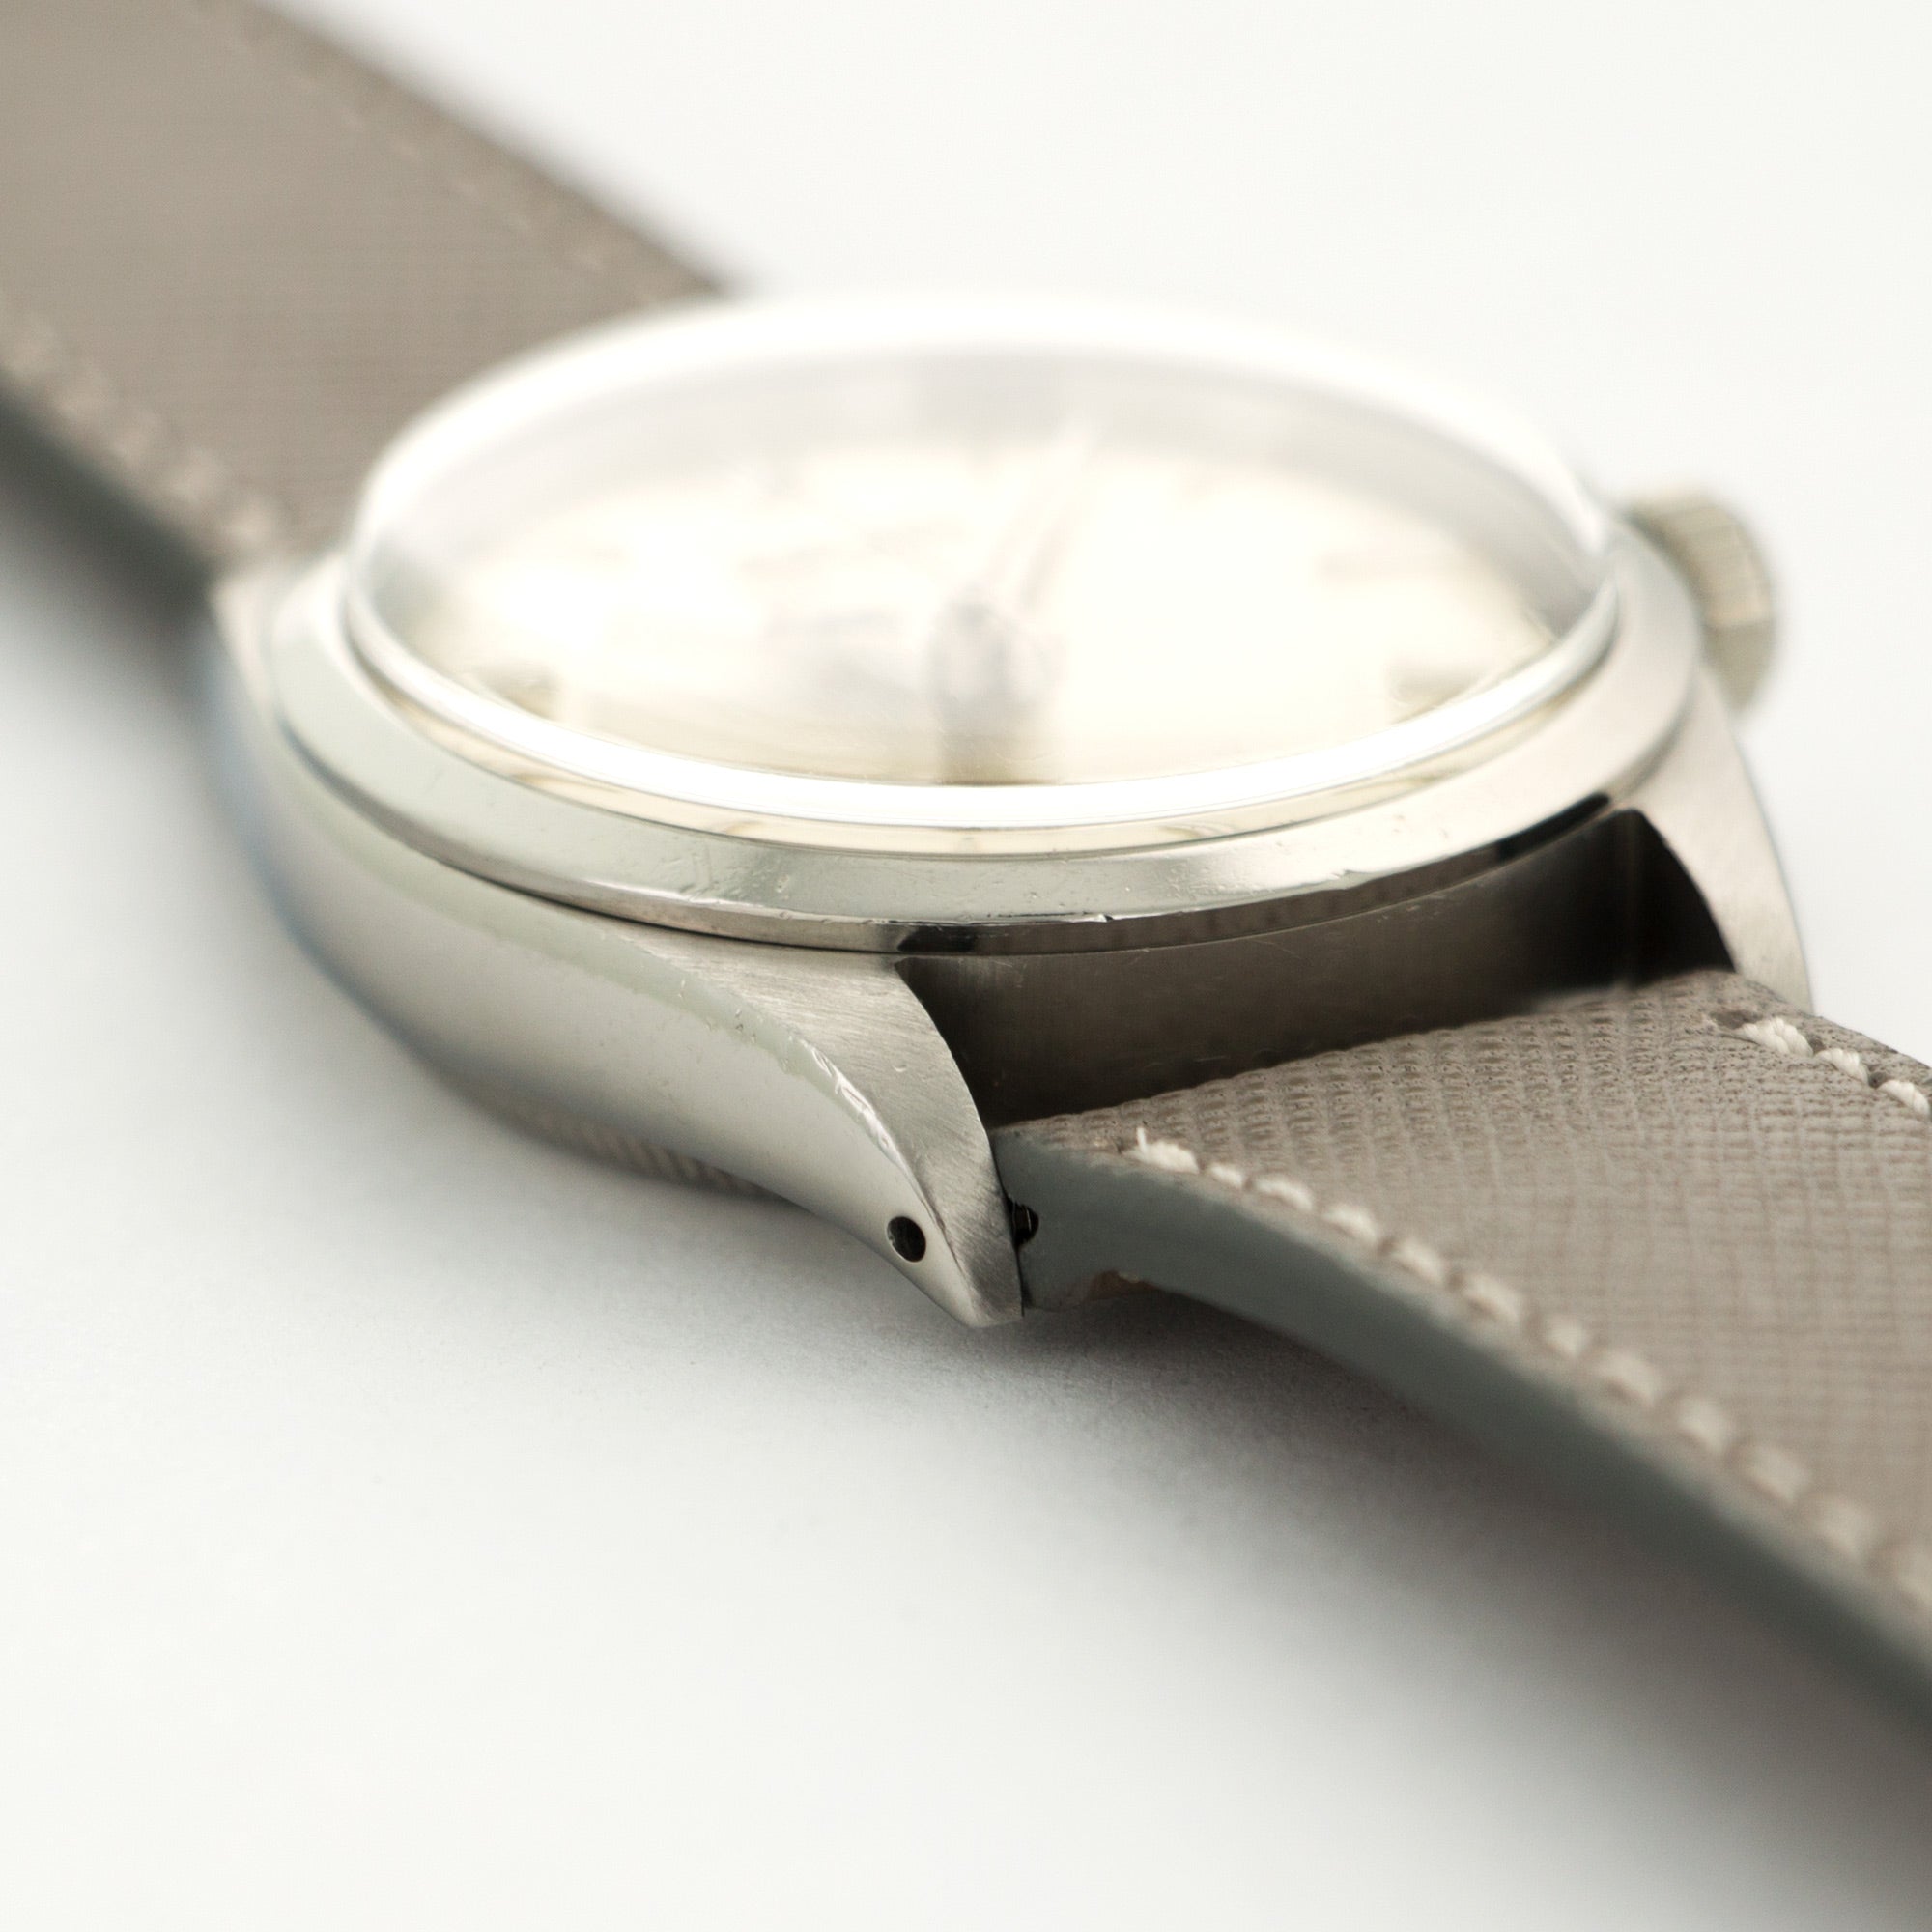 Rolex - Rolex Steel Oyster Perpetual Watch Ref. 6284 - The Keystone Watches